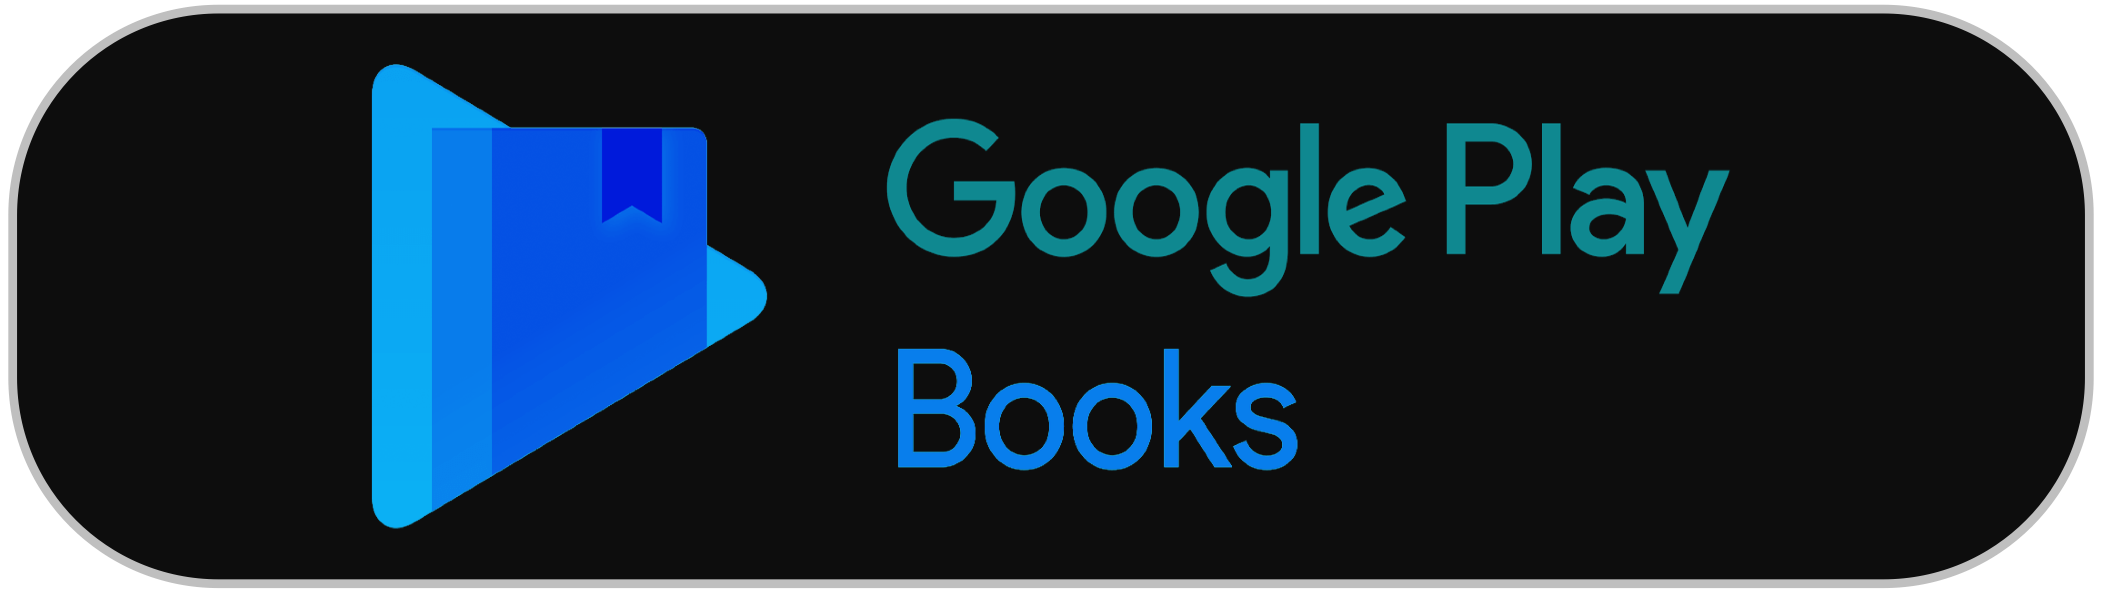 Google play books